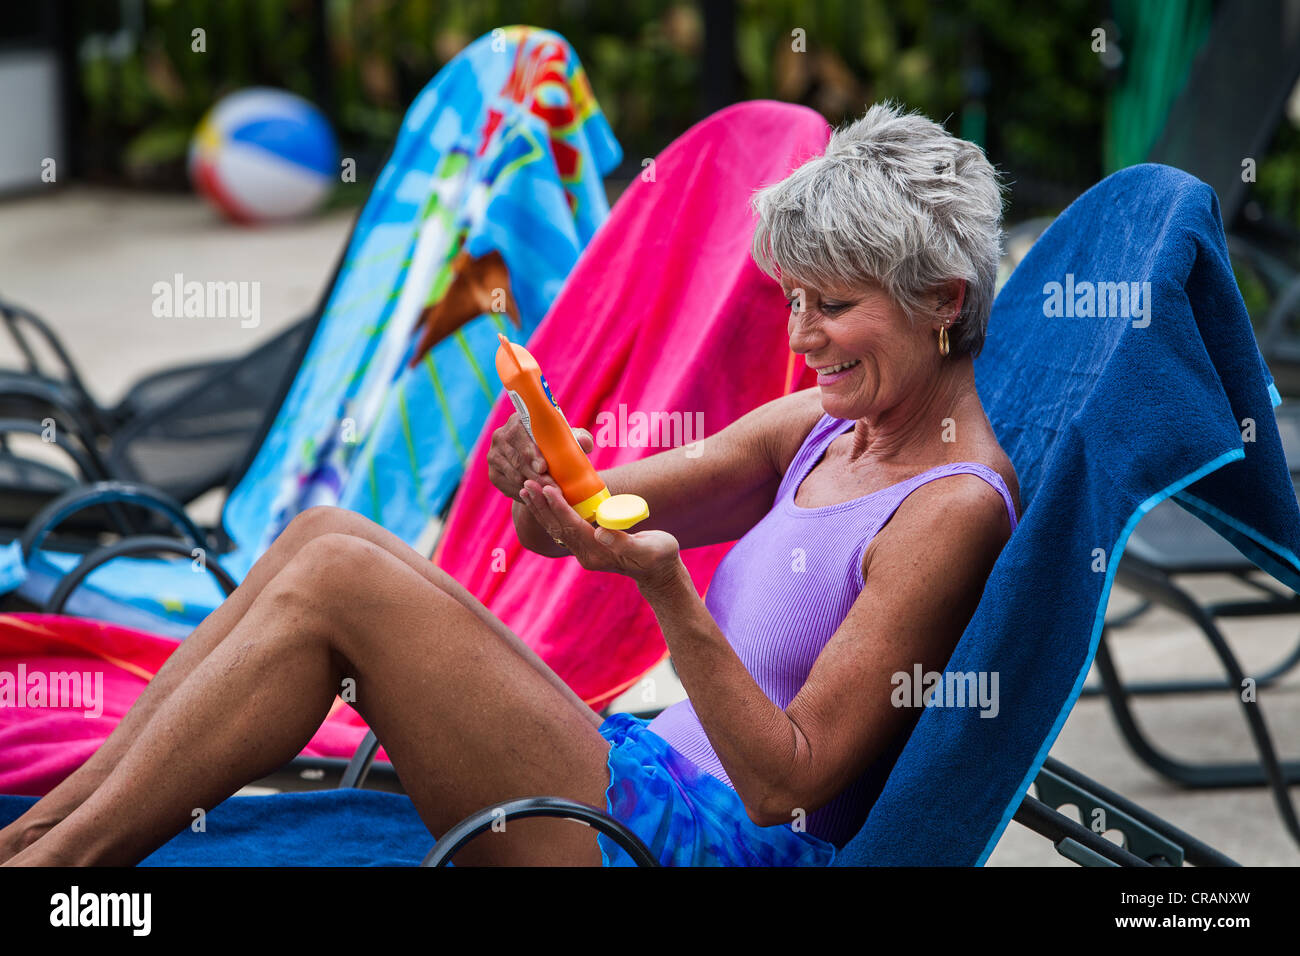 A sun bather prepares to apply suntan lotion. Stock Photo